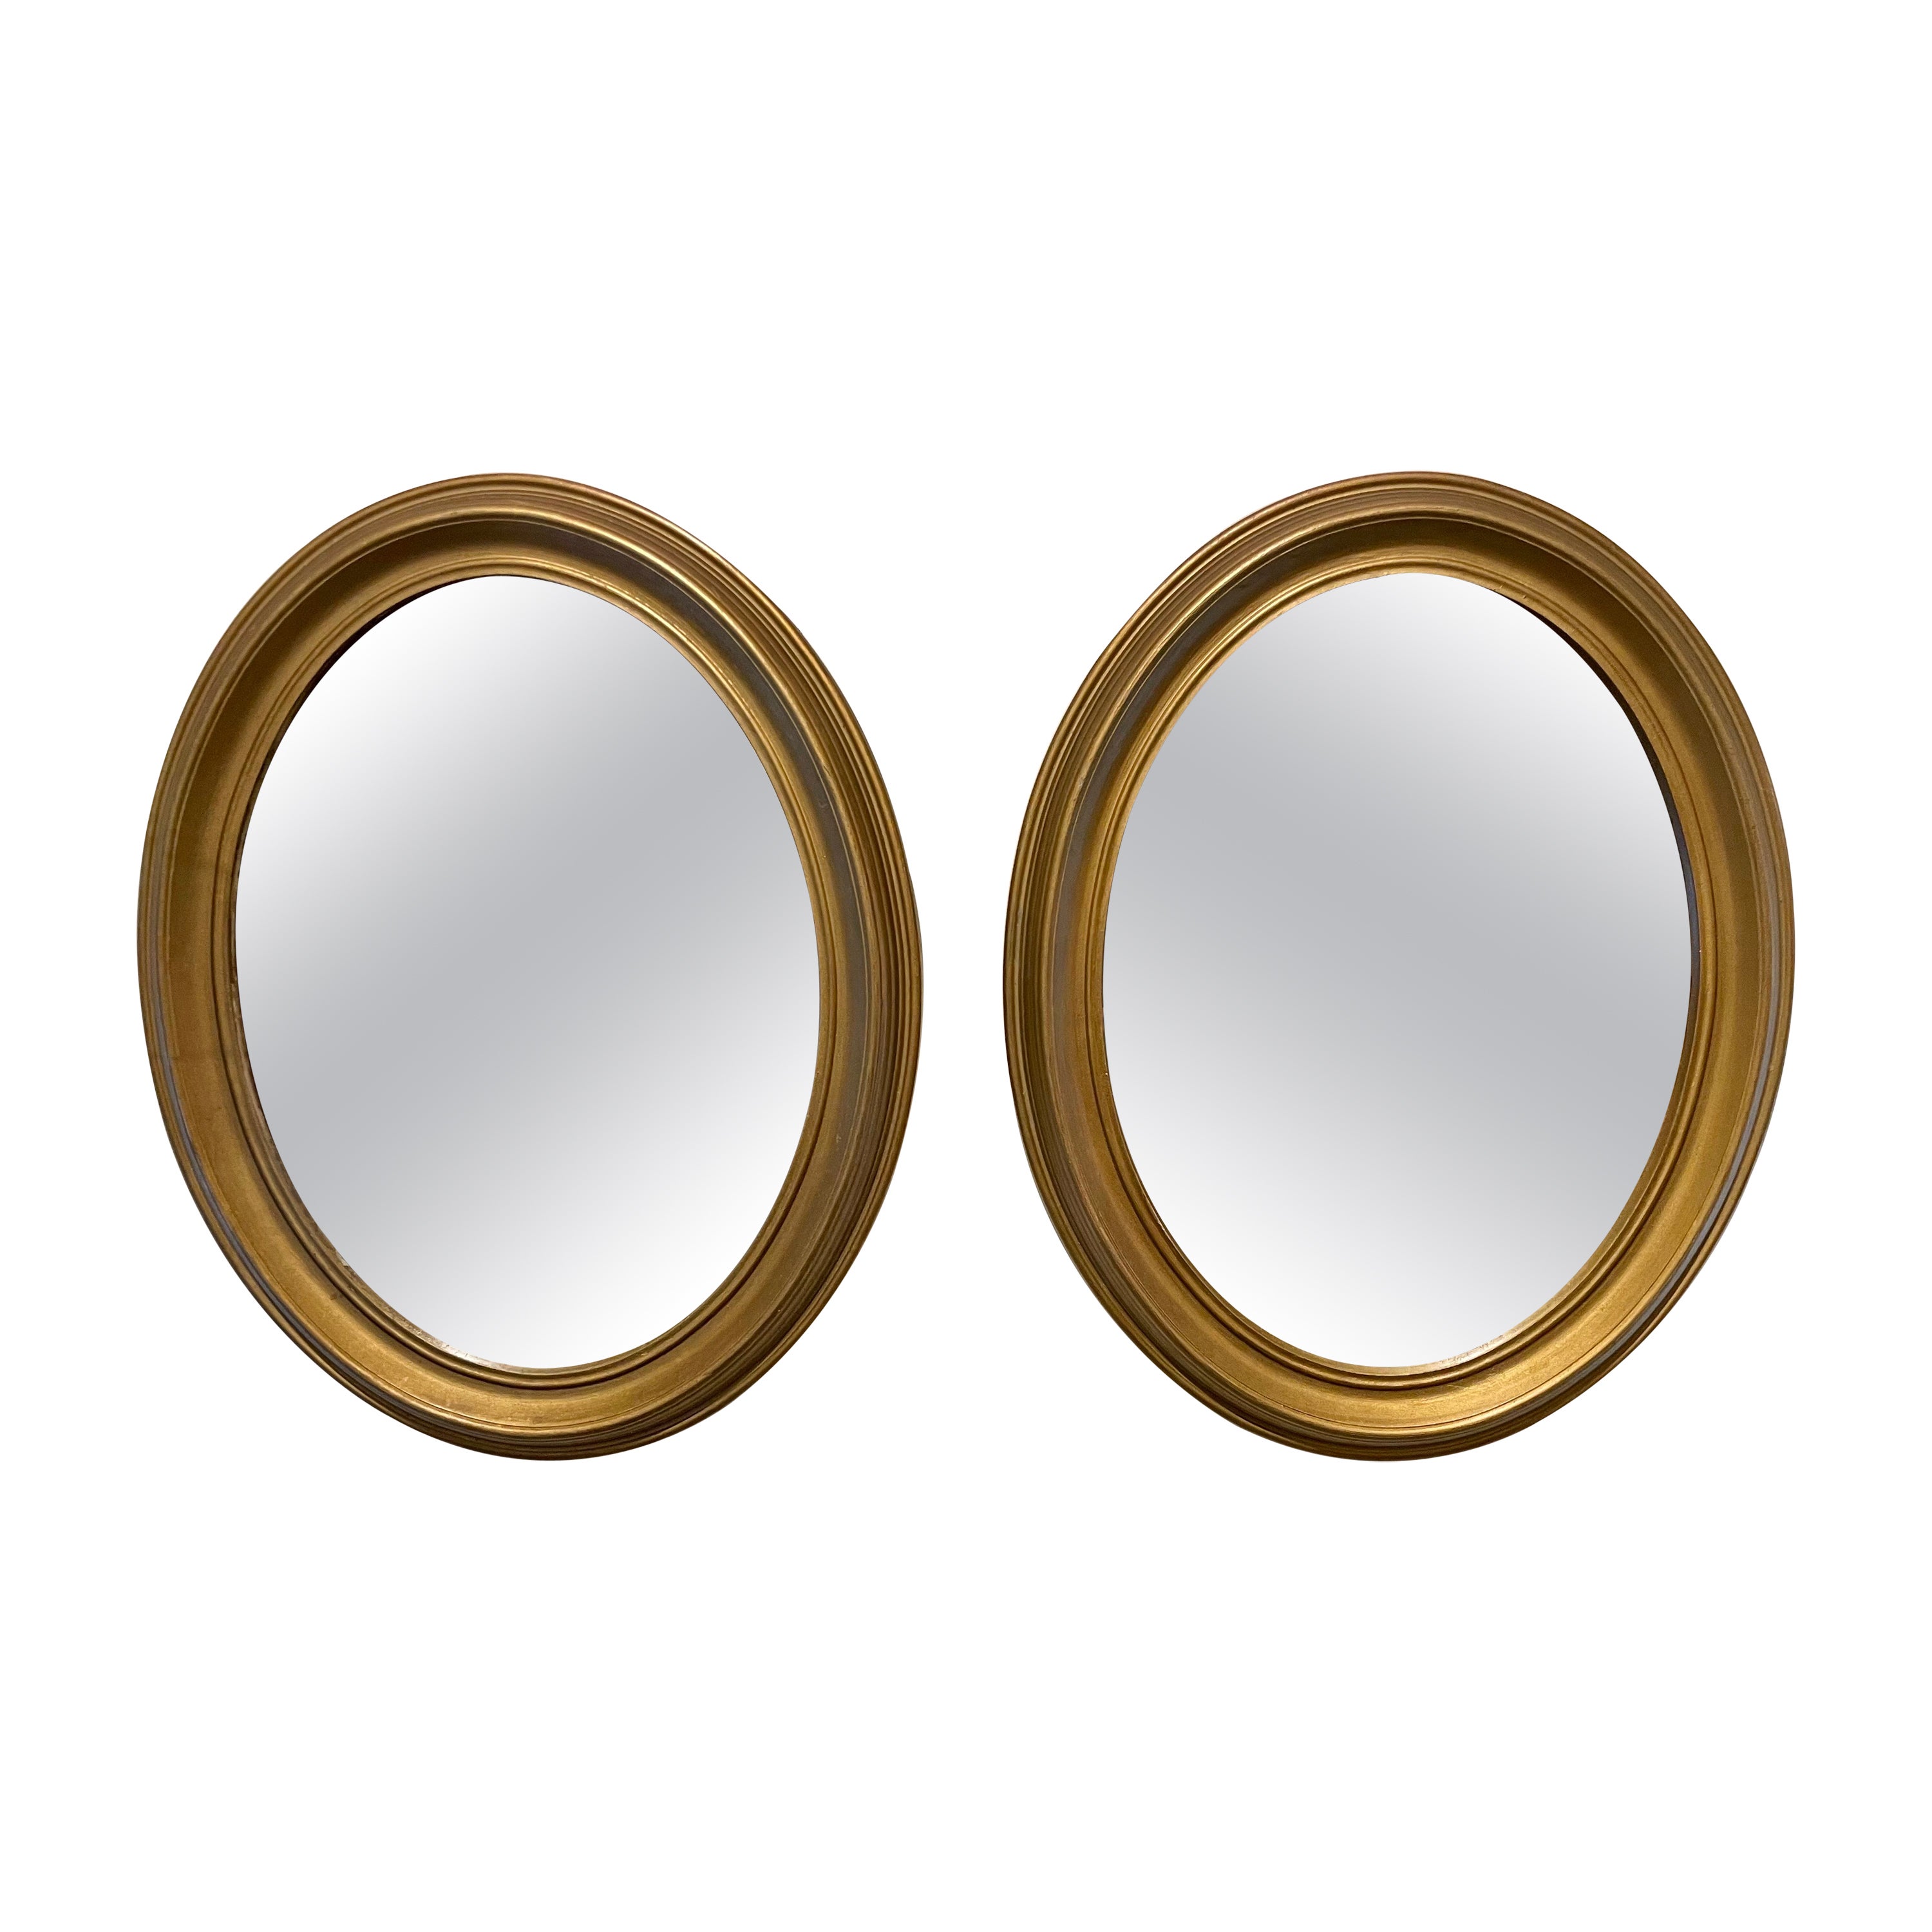 Pair of Vintage Gilt Oval Italian Mirrors